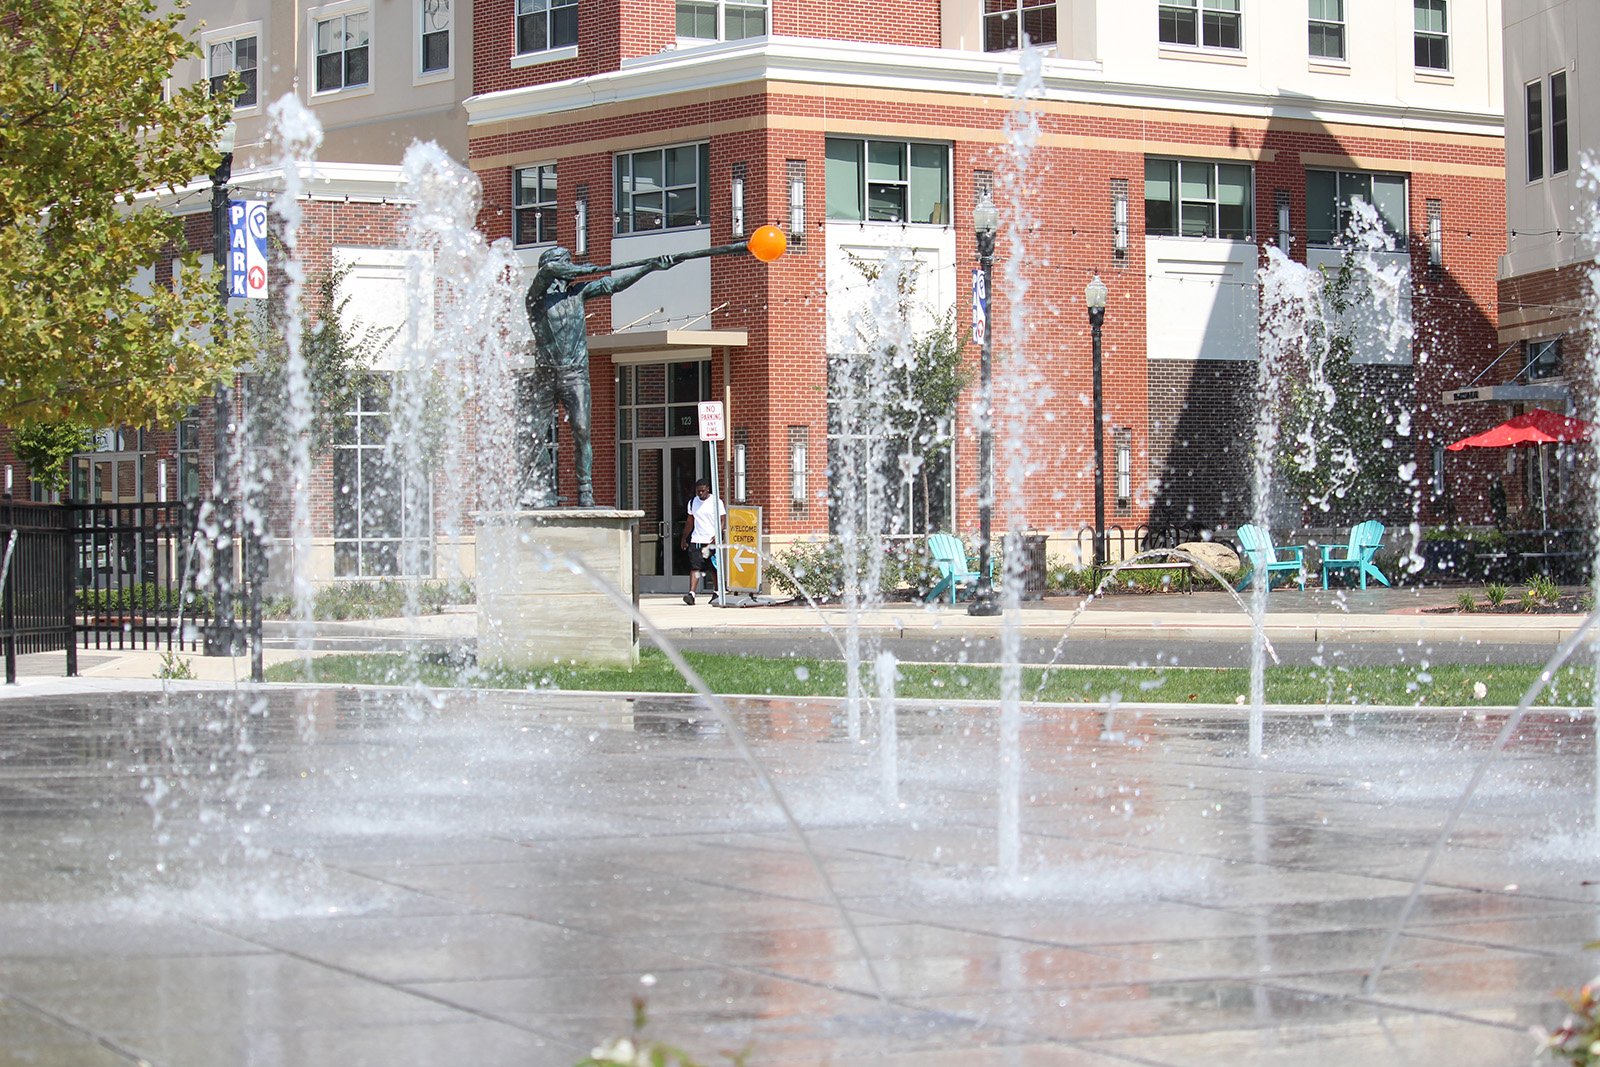 Rowan Boulevard's fountains in the spring.